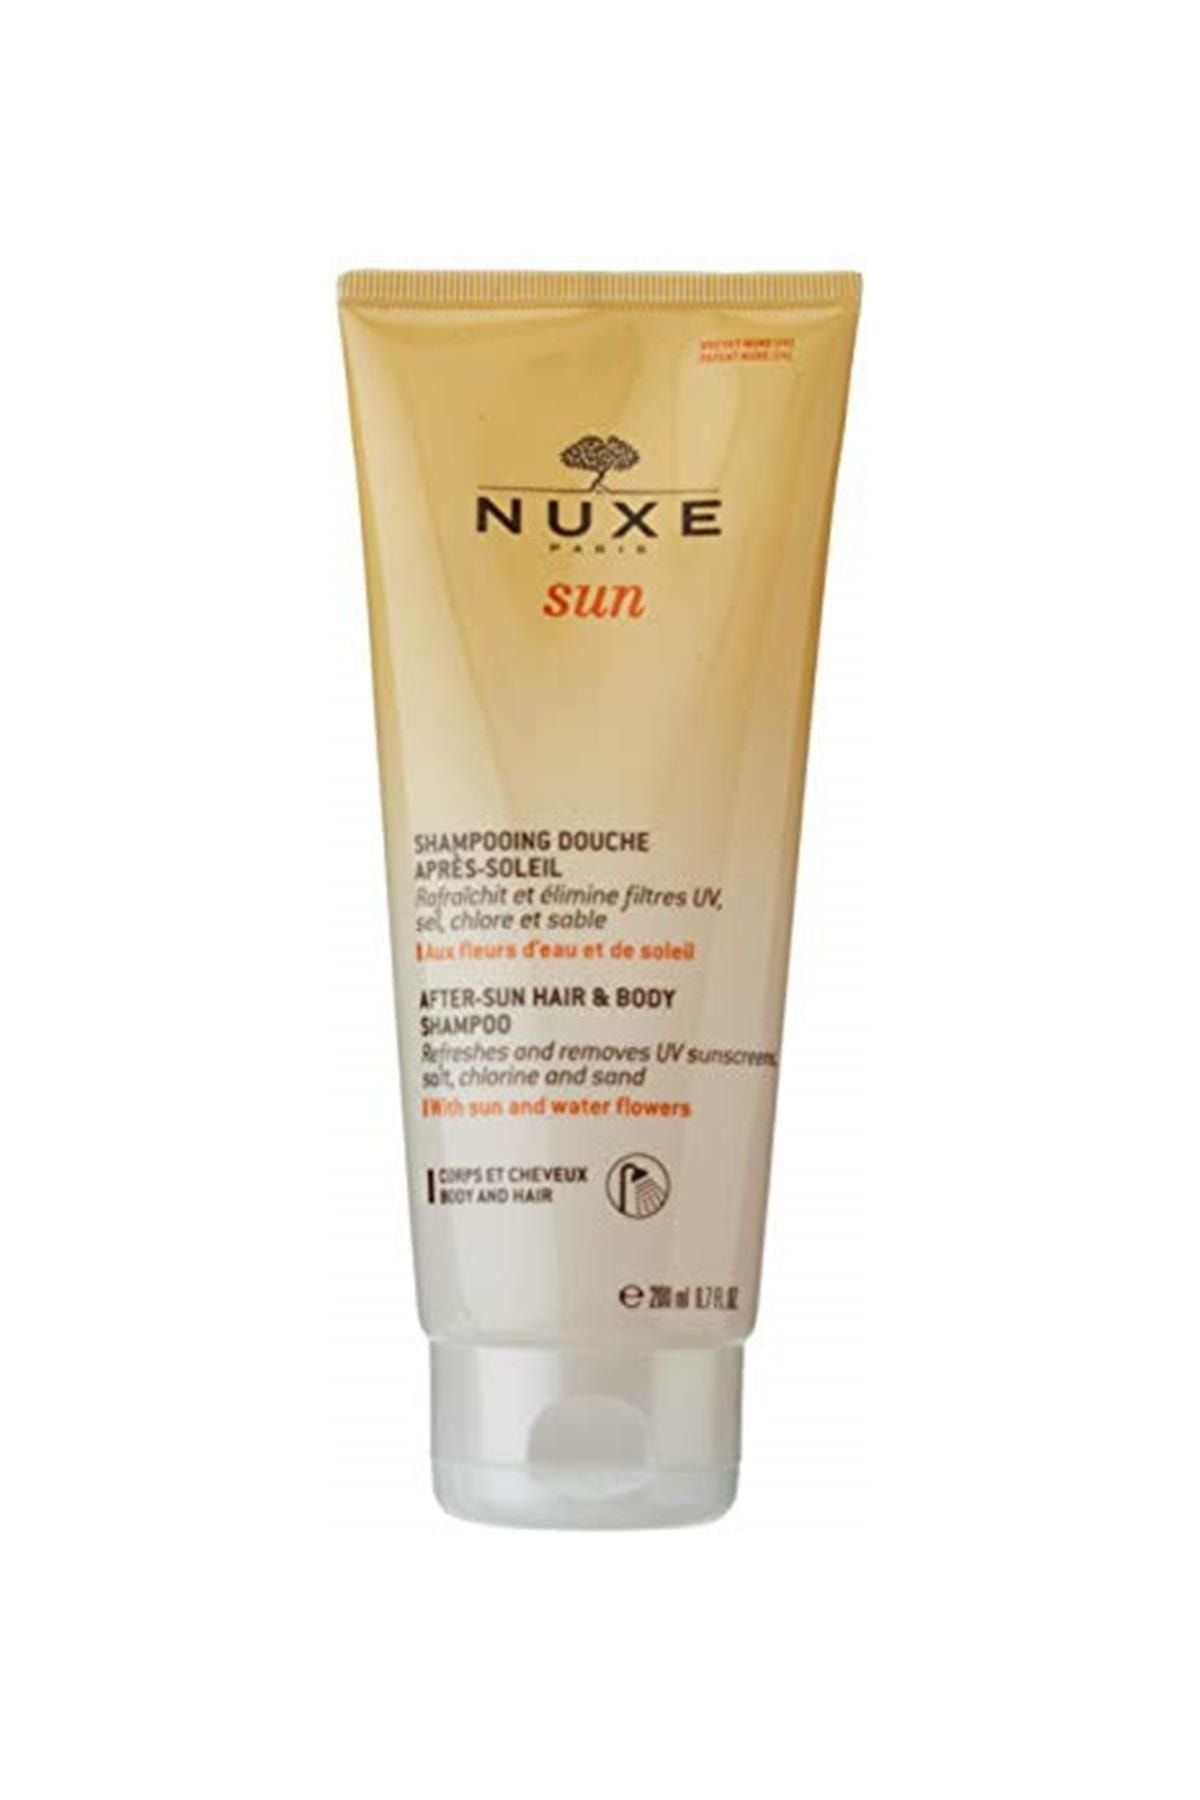 Nuxe شامپو بعد از آفتاب مو و بدن شامپو مو و بدن بعد از آفتاب 200 میلی لیتر 1 بسته